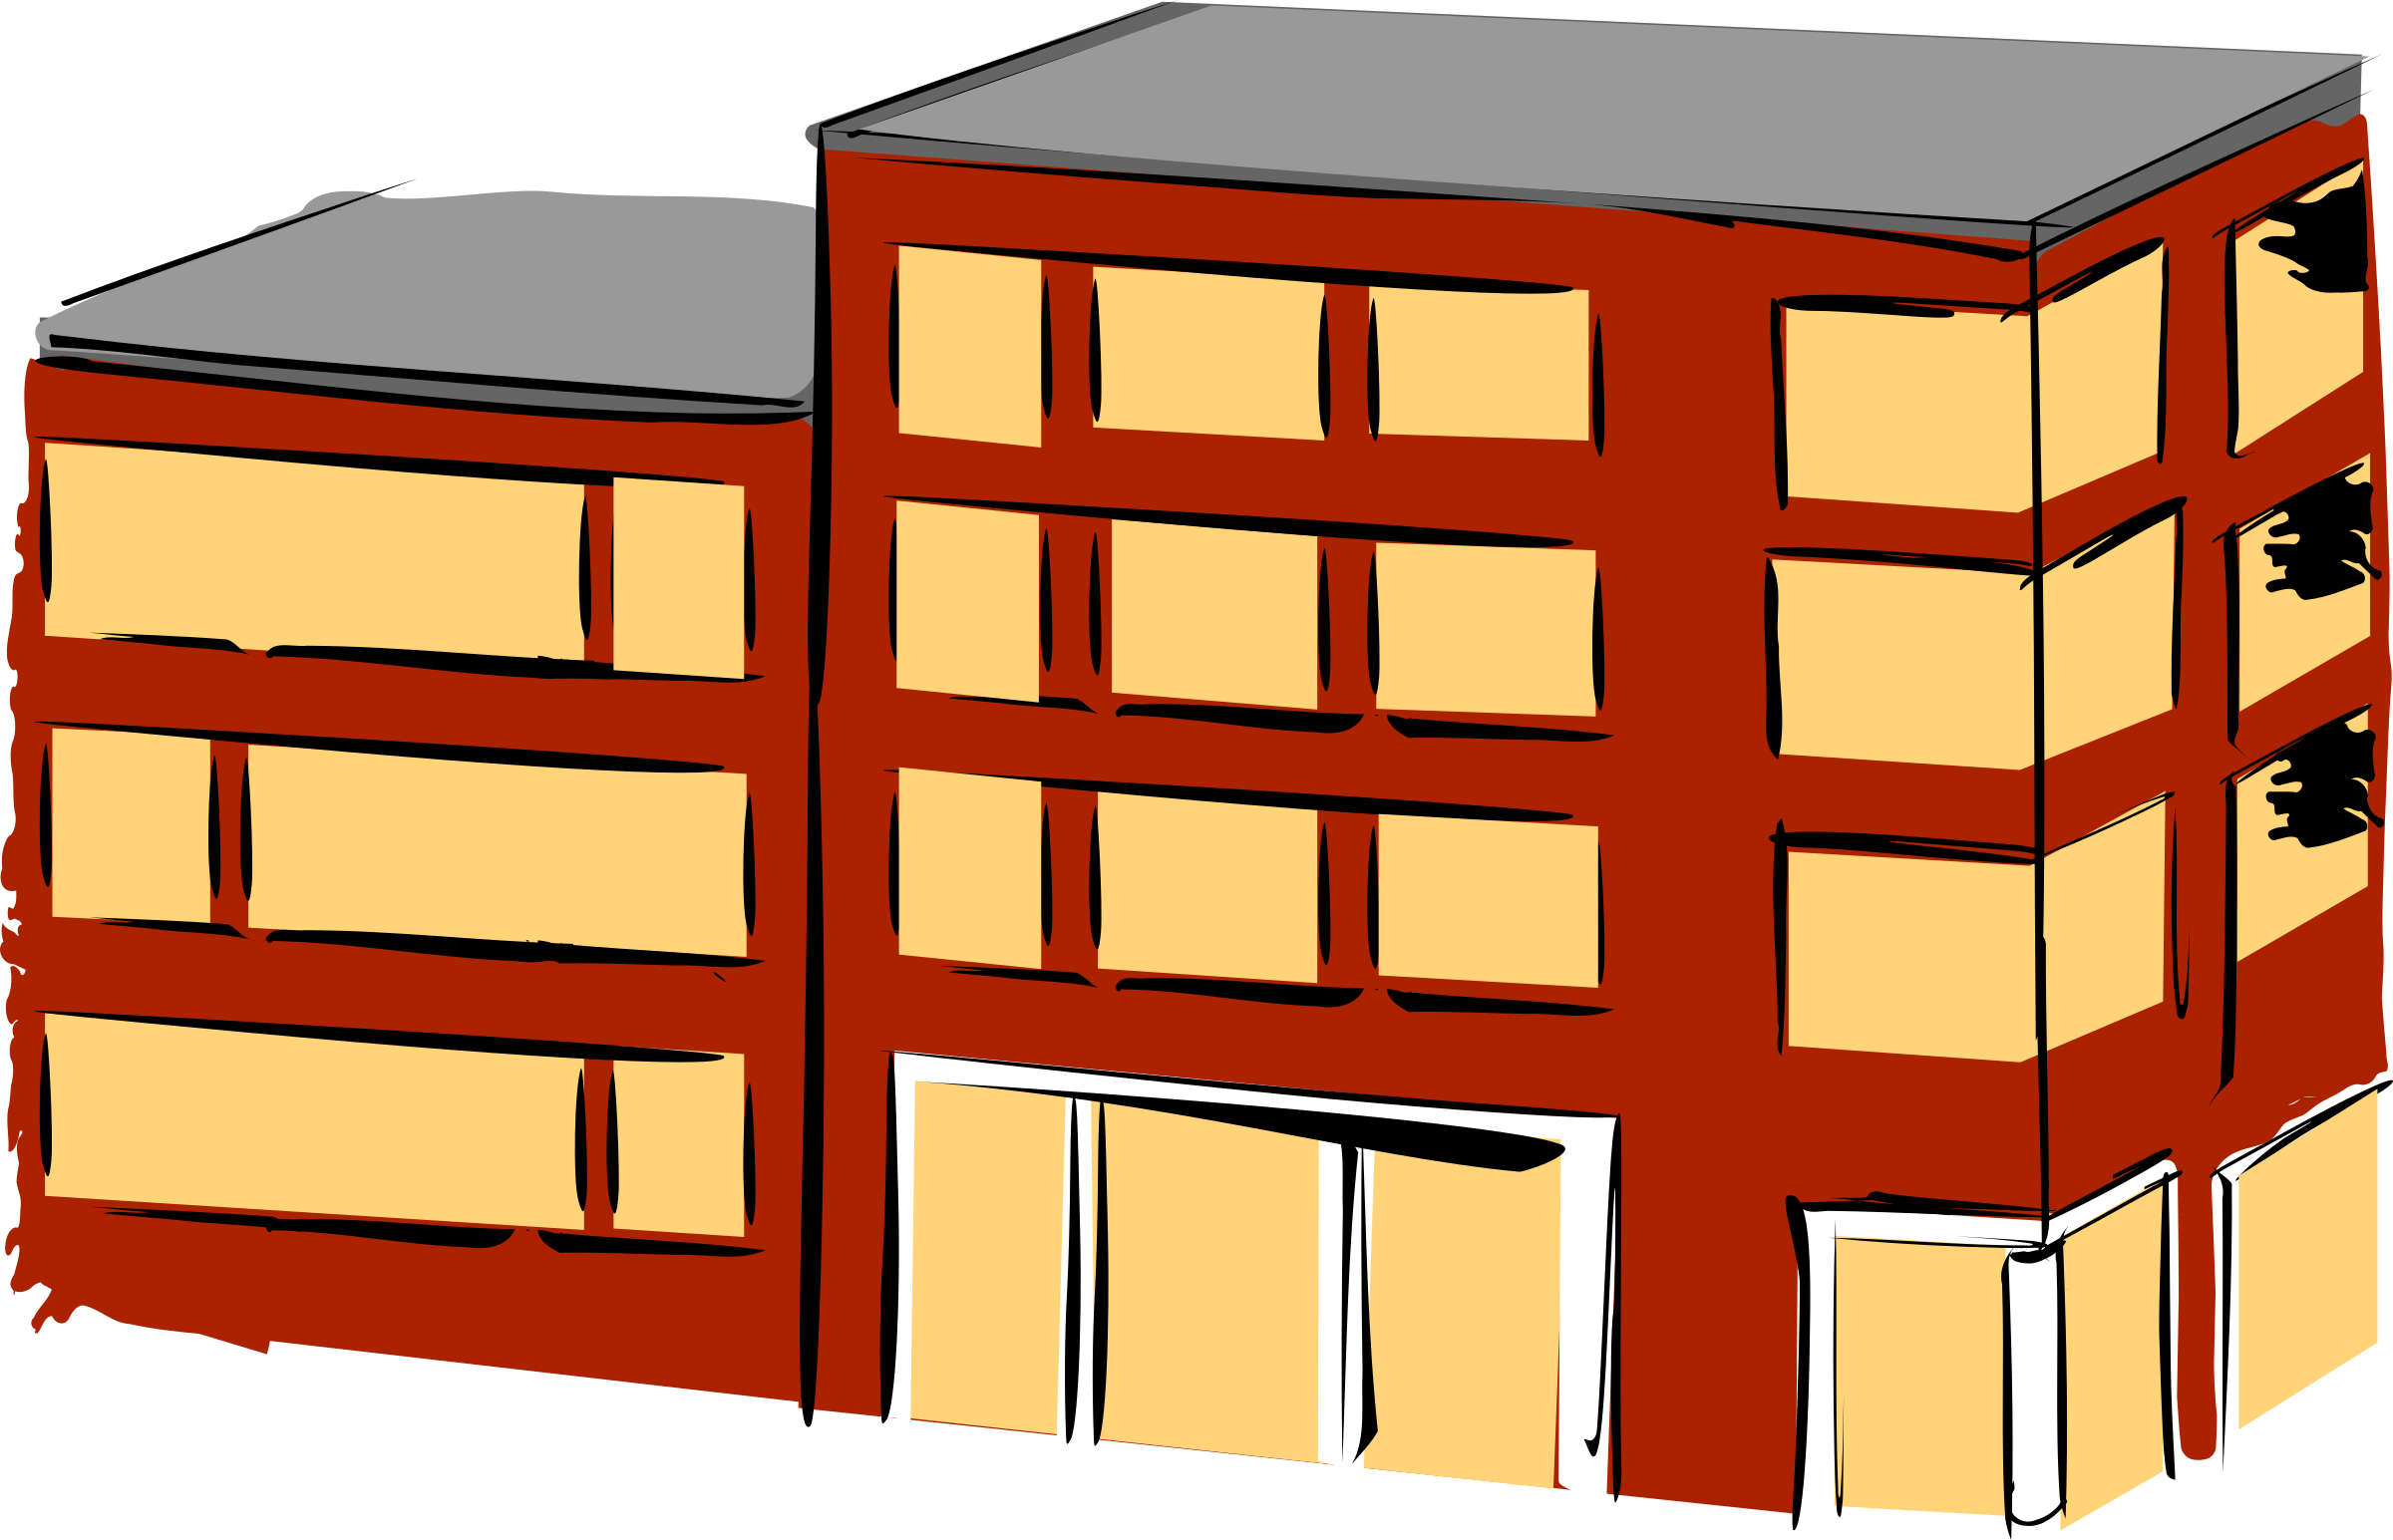 Apartment building - Apartment Building Clip Art